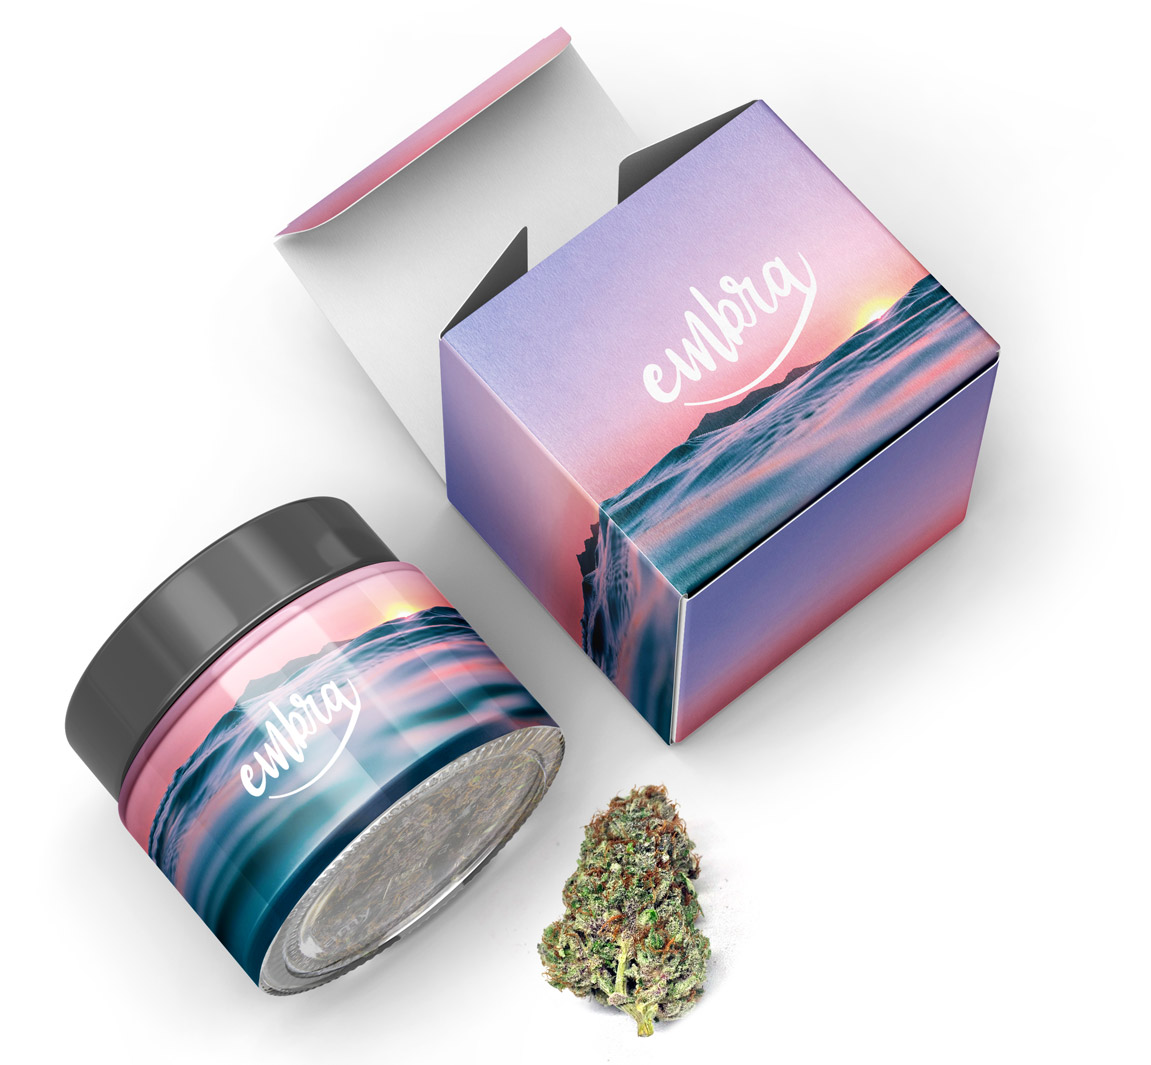 Embra's premium cannabis flower packaging